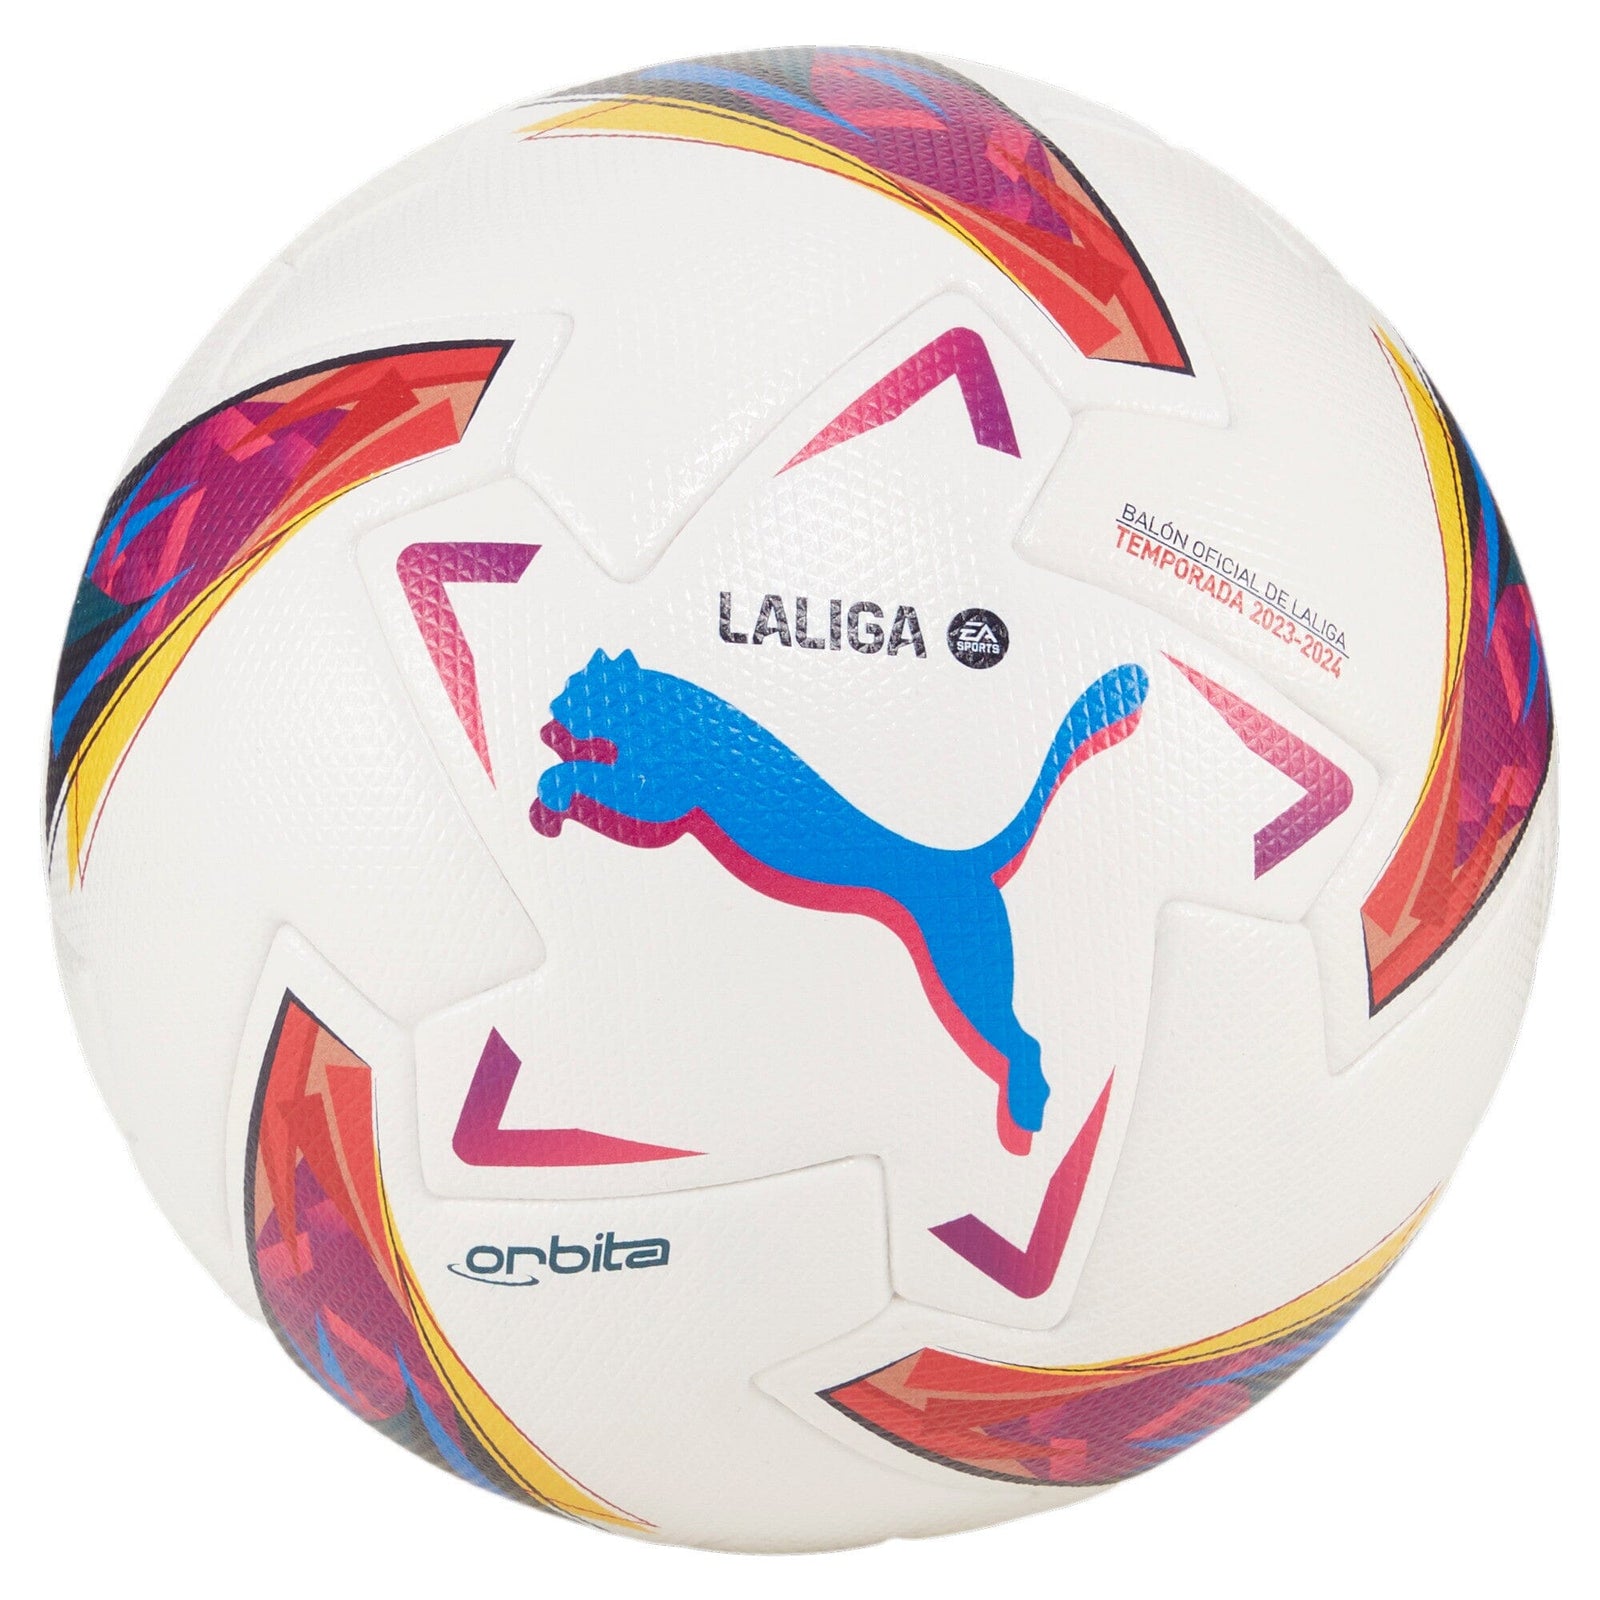 Puma Orbita Laliga 1 Mini Soccer Ball | 08411101 - Goal Kick Soccer